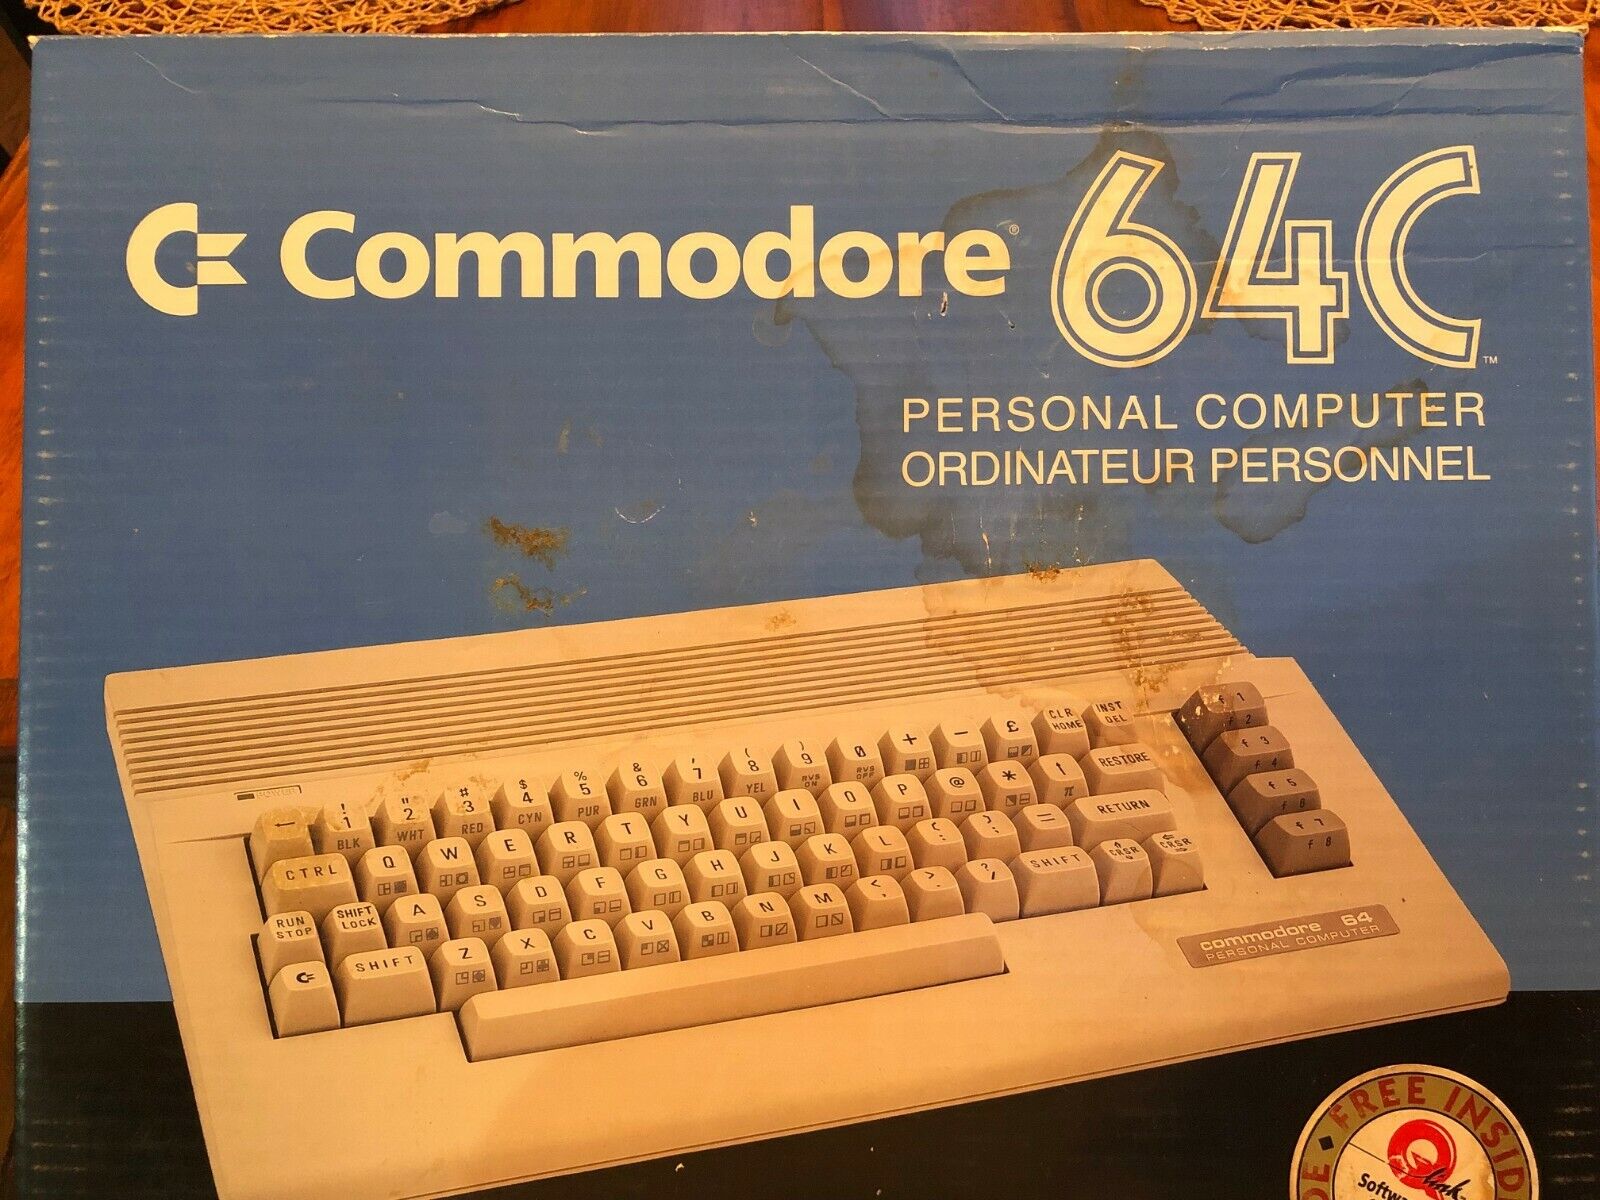 Commodore 64C Computer  Vintage,   NEW in Box, storage unit find